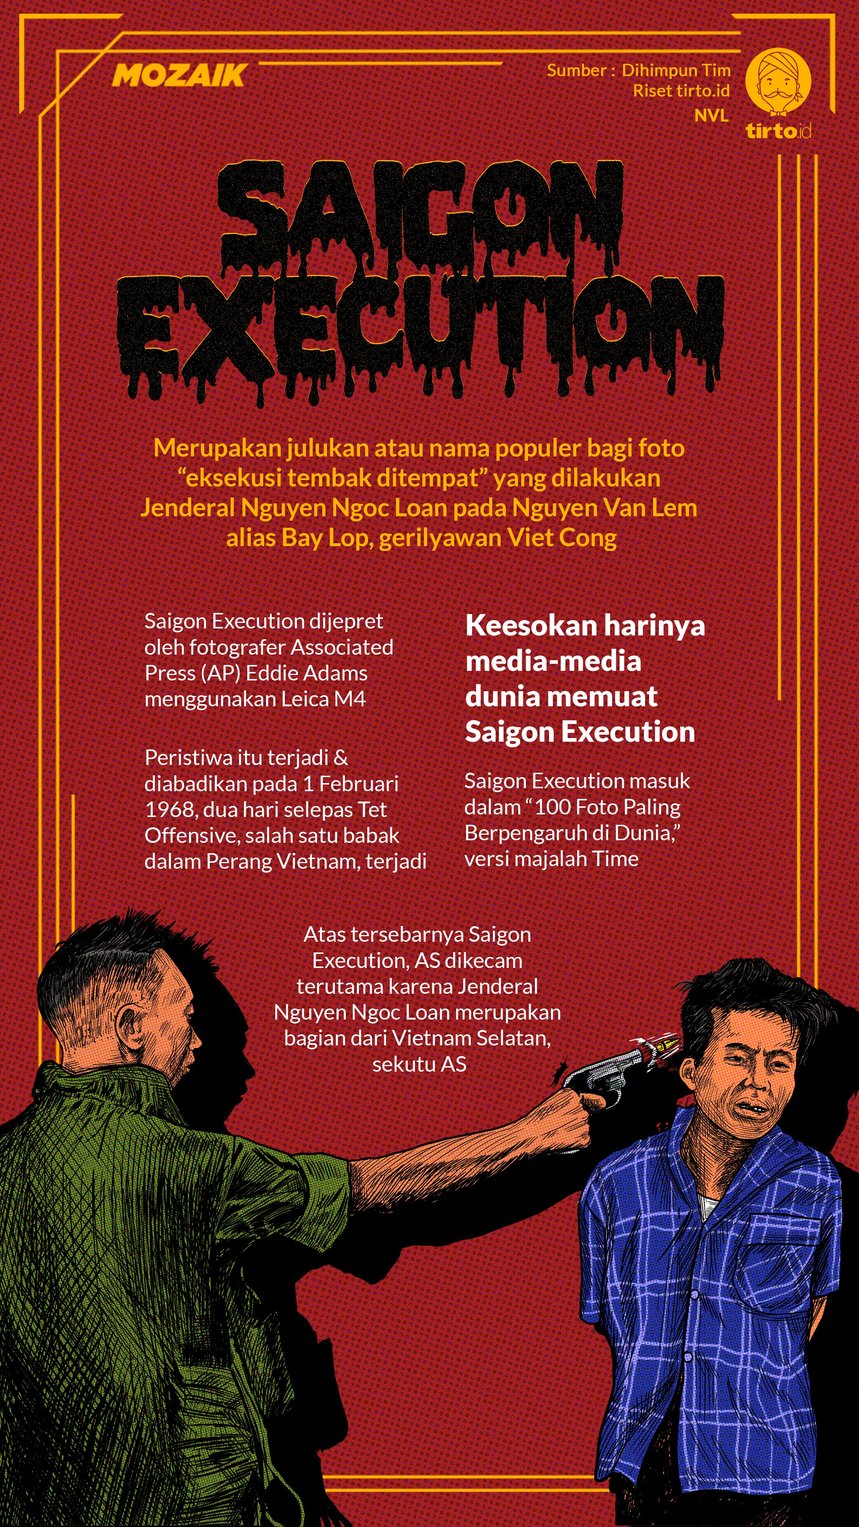 Infografik Mozaik Saigon Execution